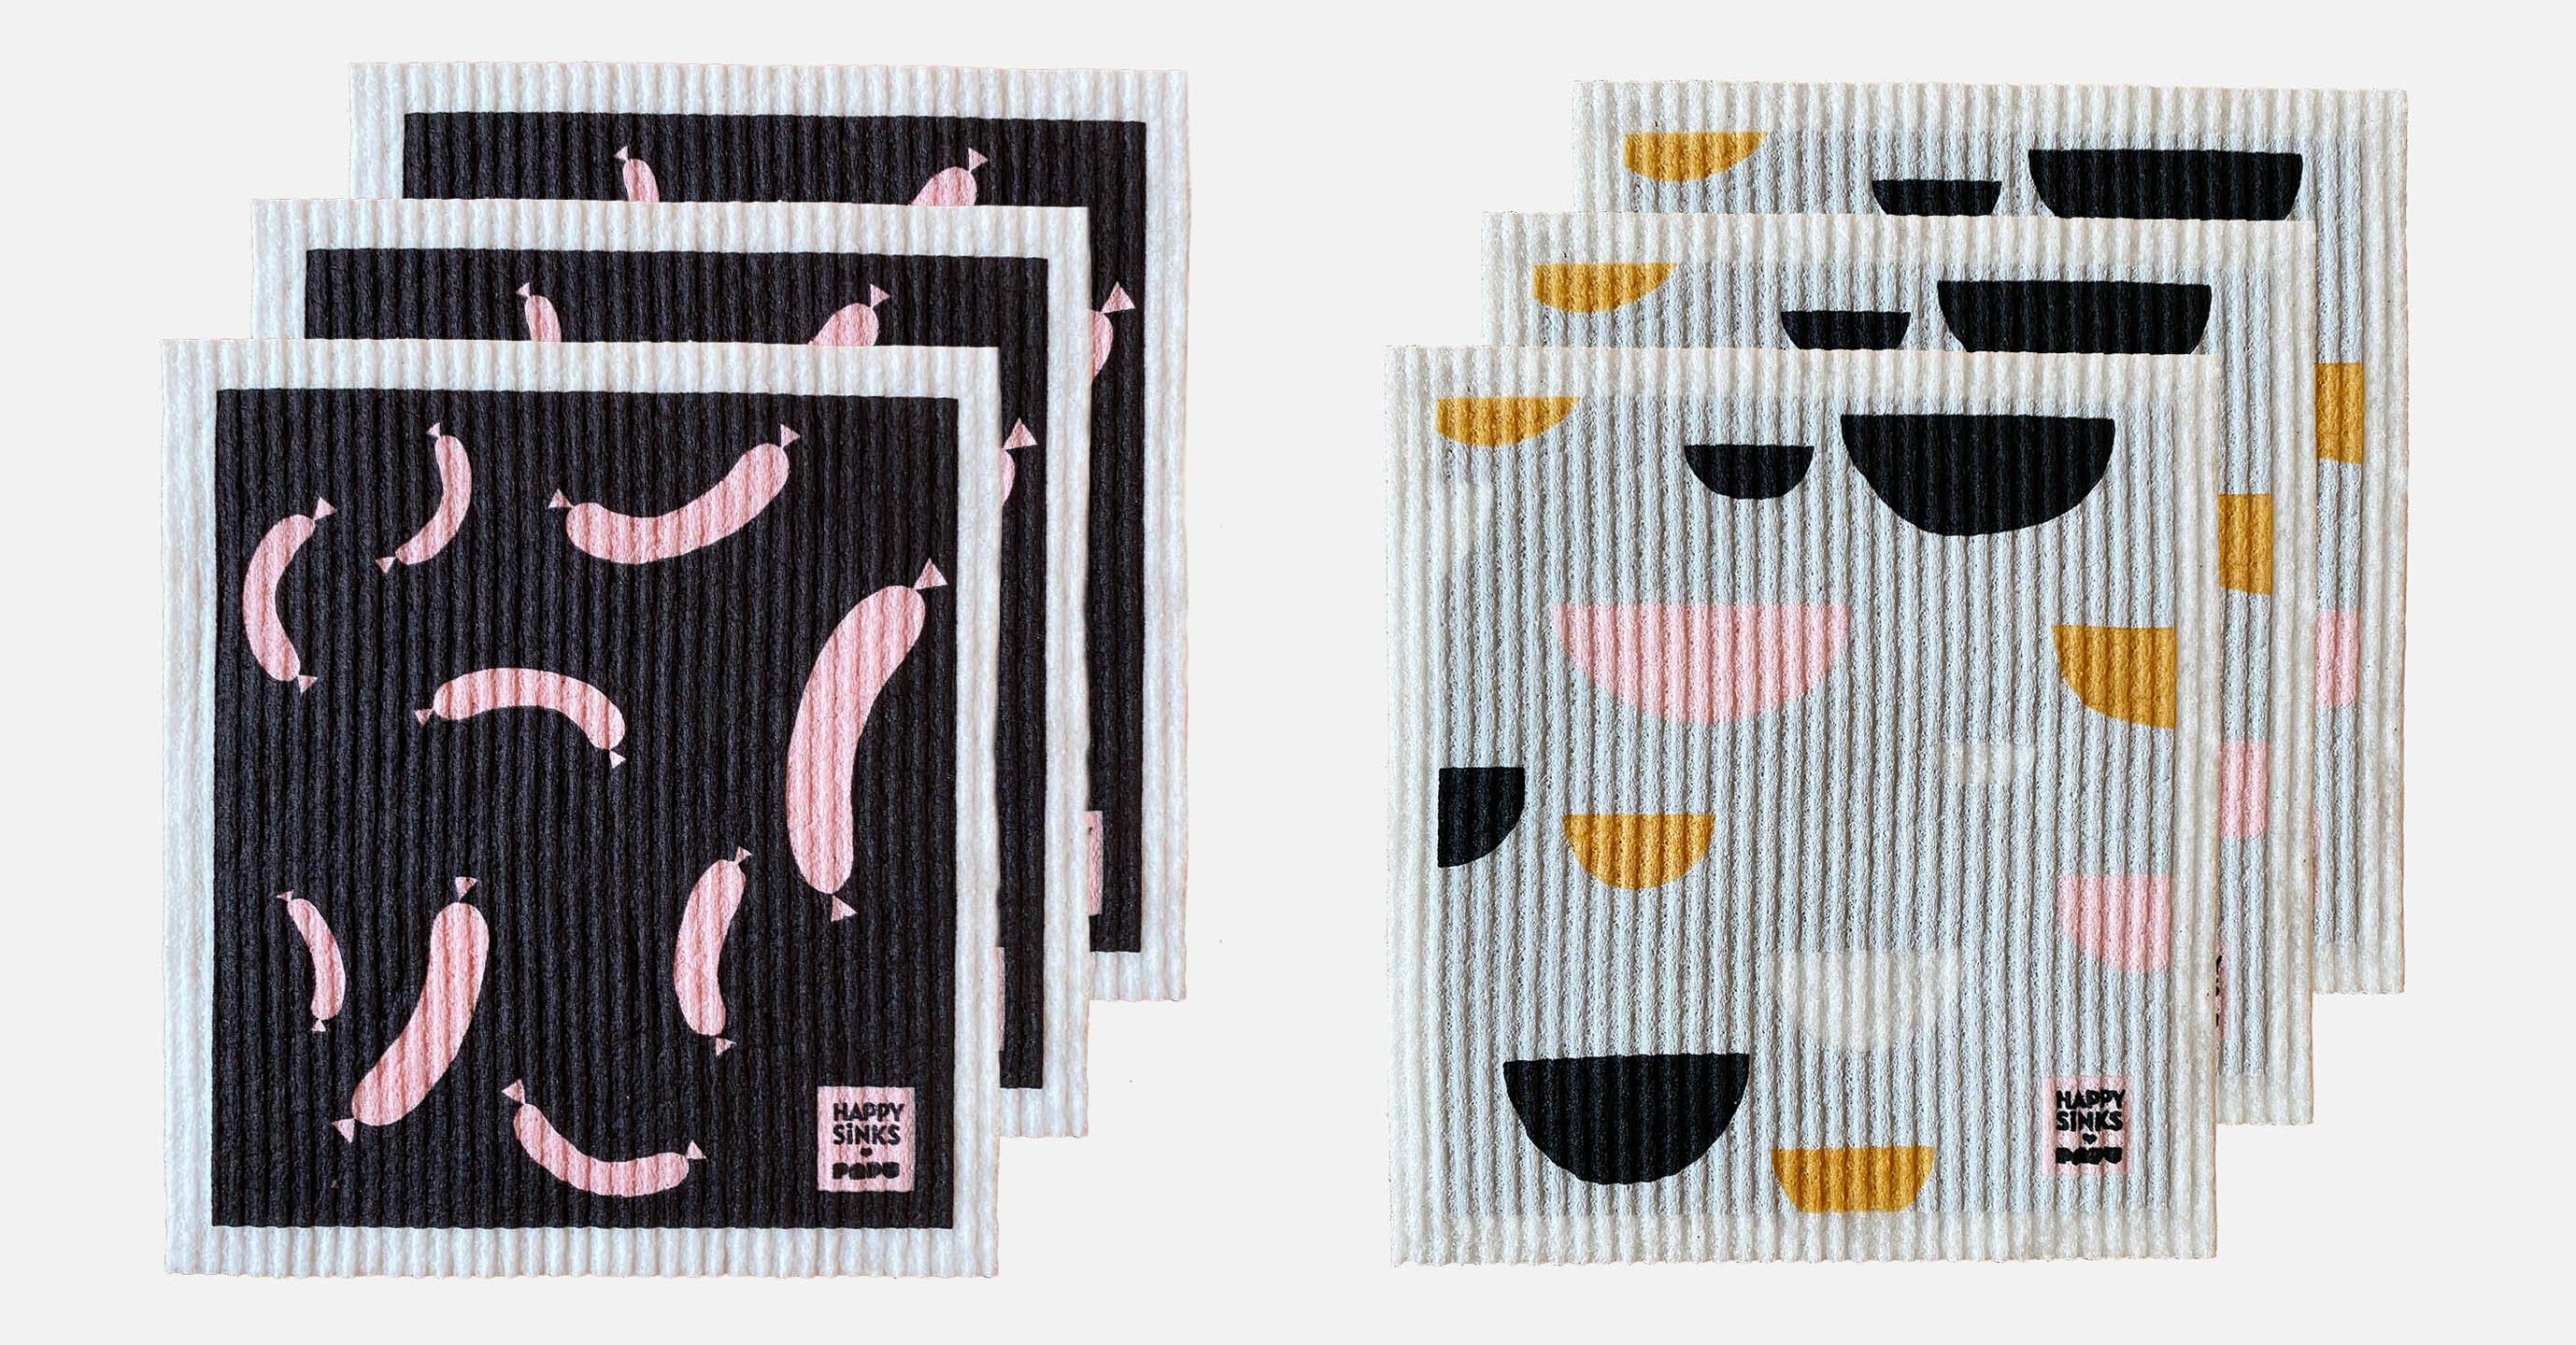 Papu Swedish dishcloth designer collaboration with HAPPY SiNKS